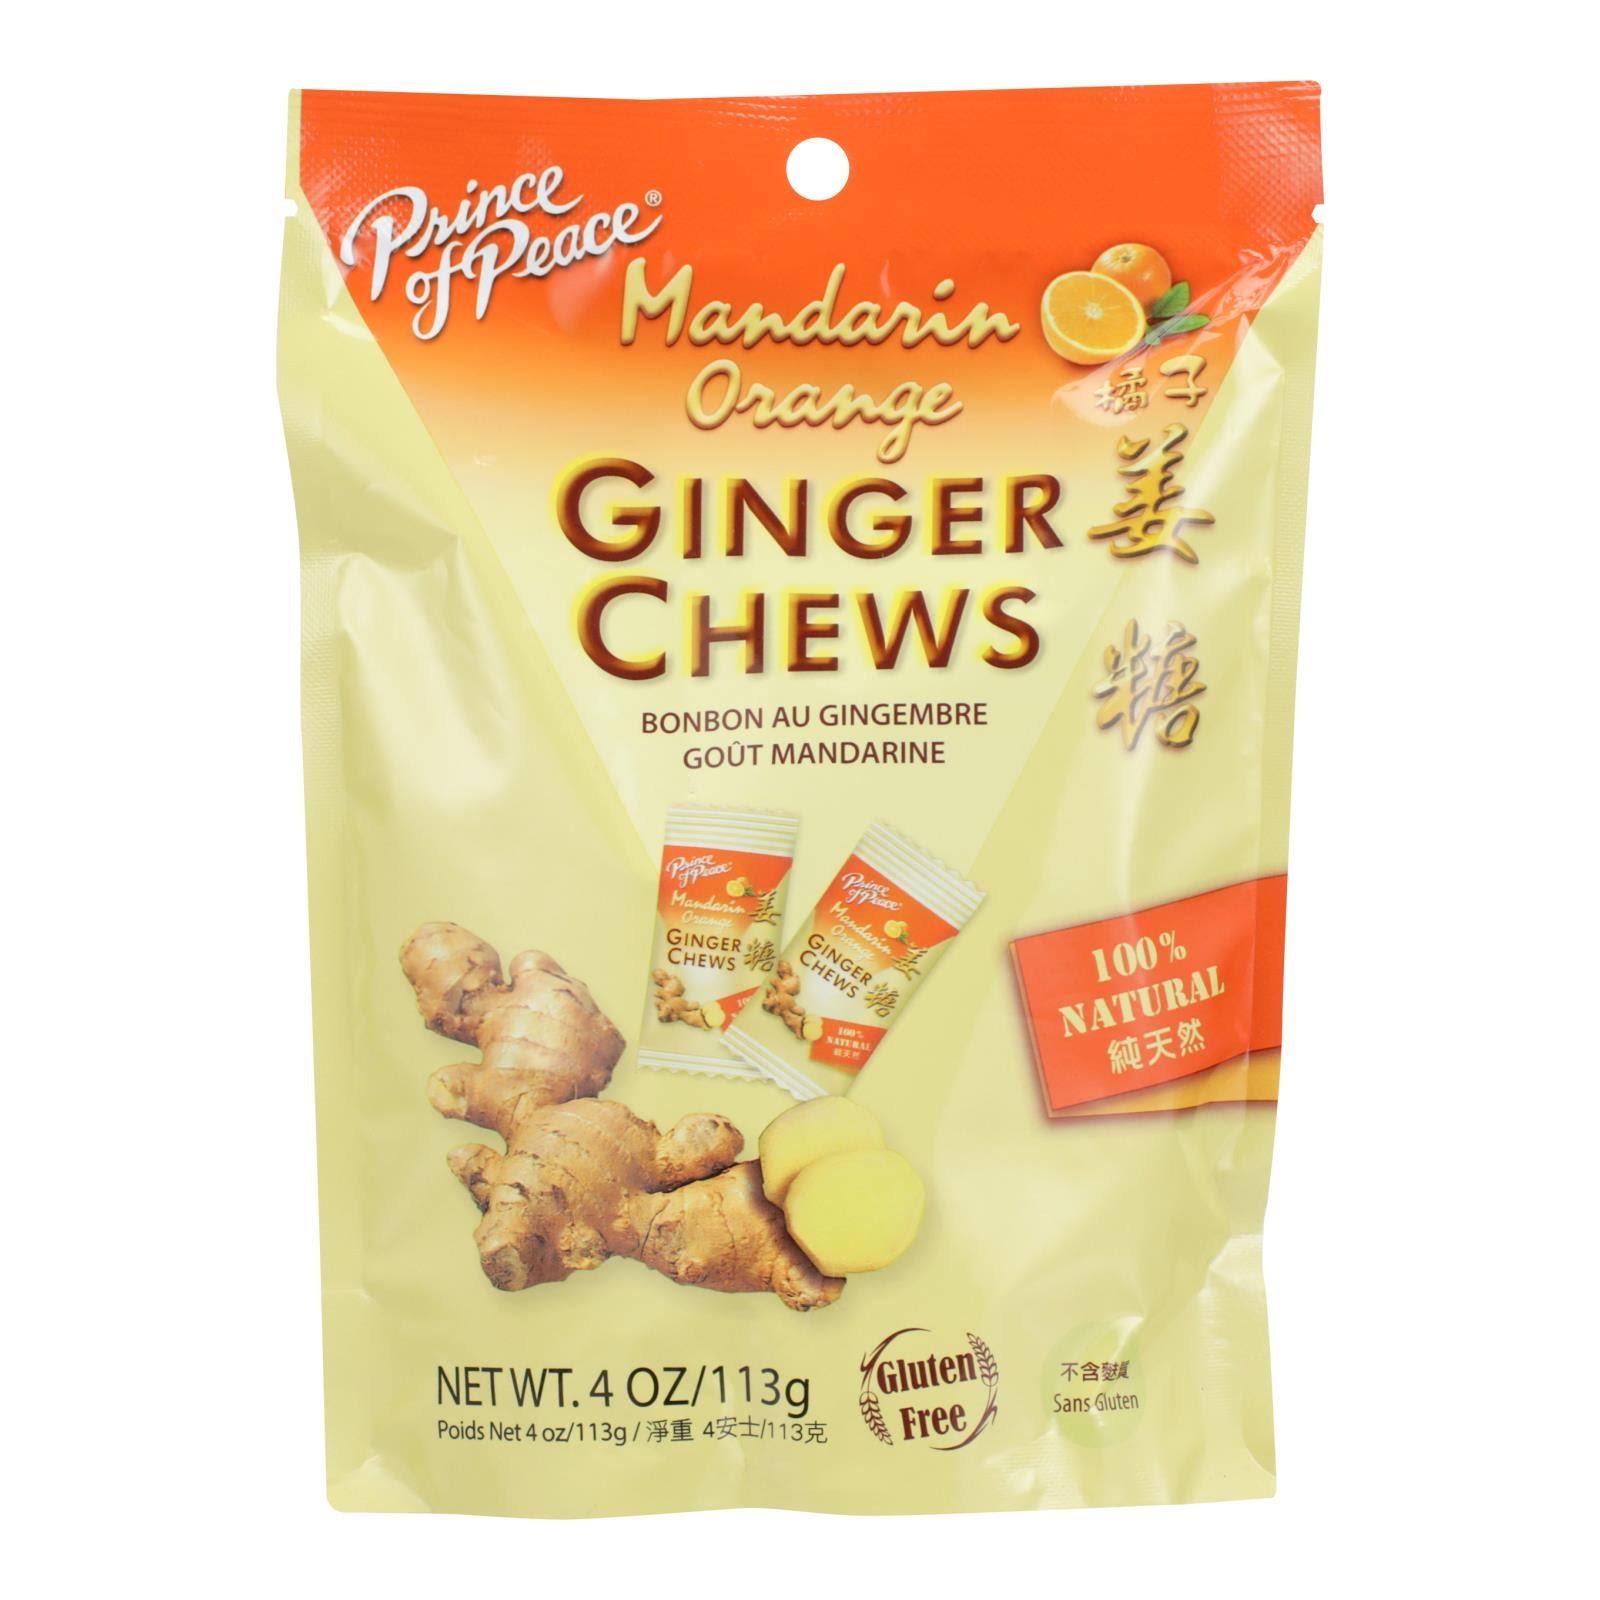 Prince Of Peace Ginger Chews, 100% Natural, Mandarin Orange - 4 oz